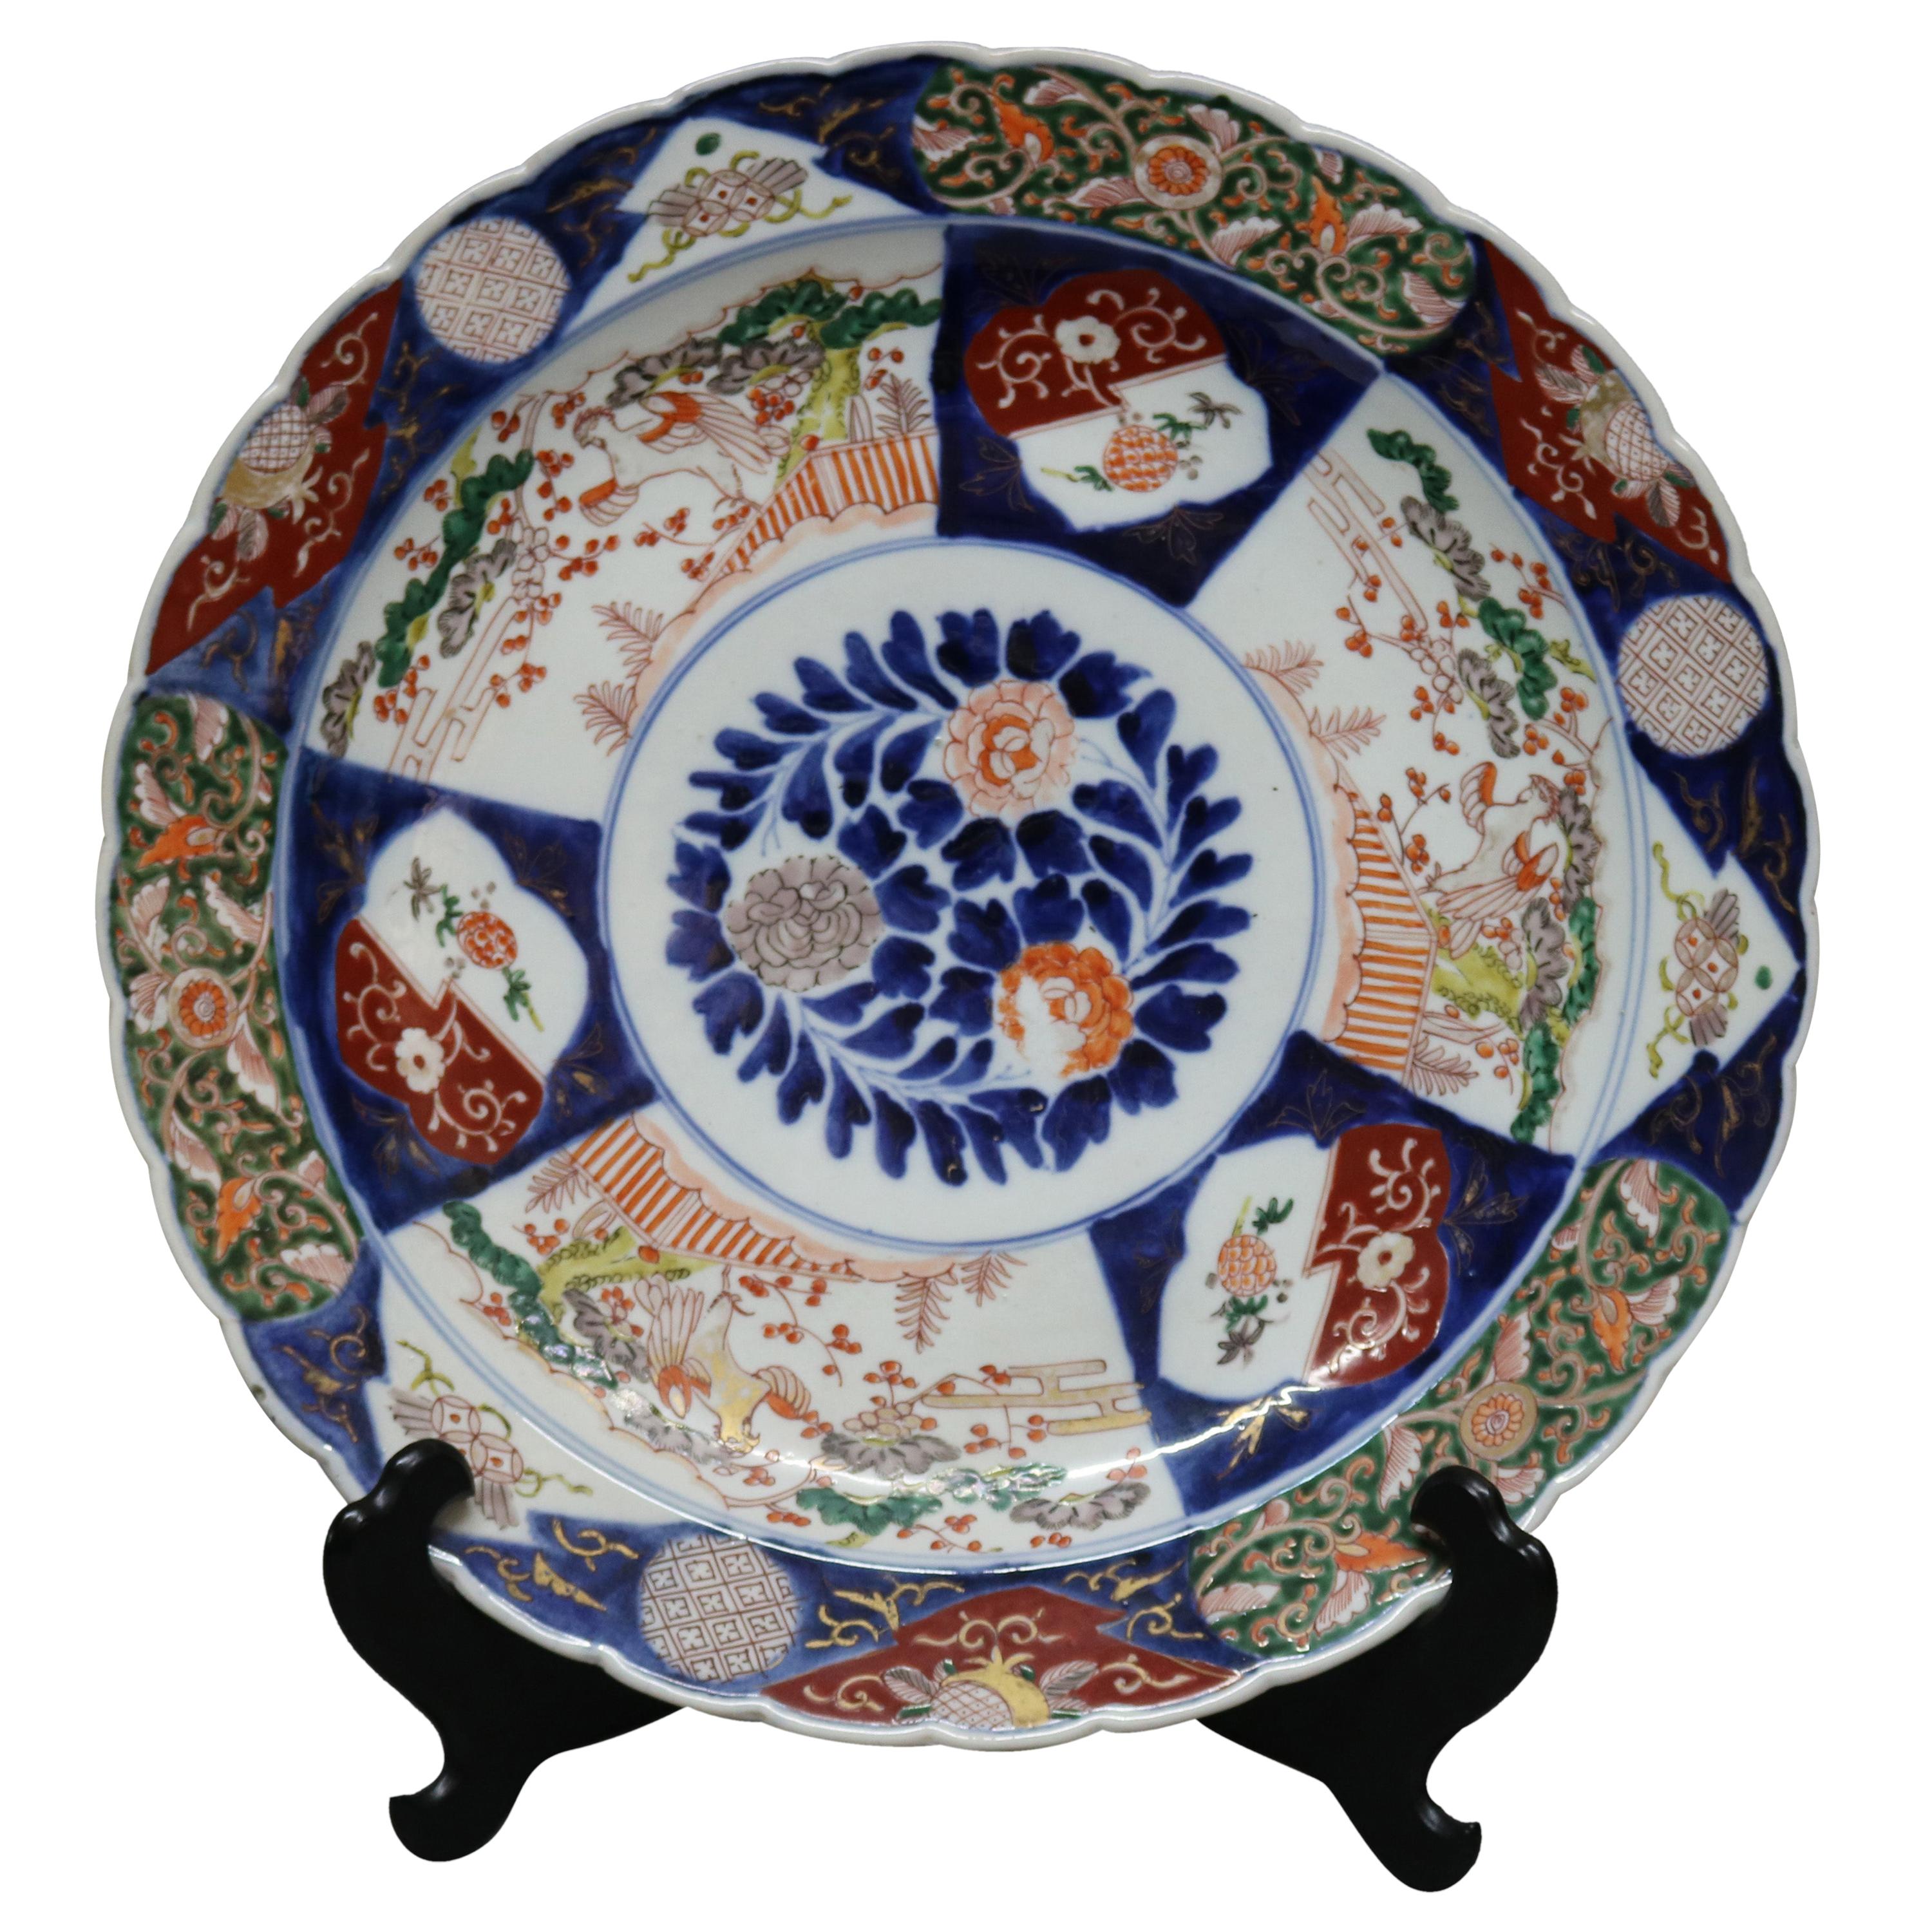 Antique Japanese Imari Hand Enameled Porcelain Charger, Garden Motif, c1900